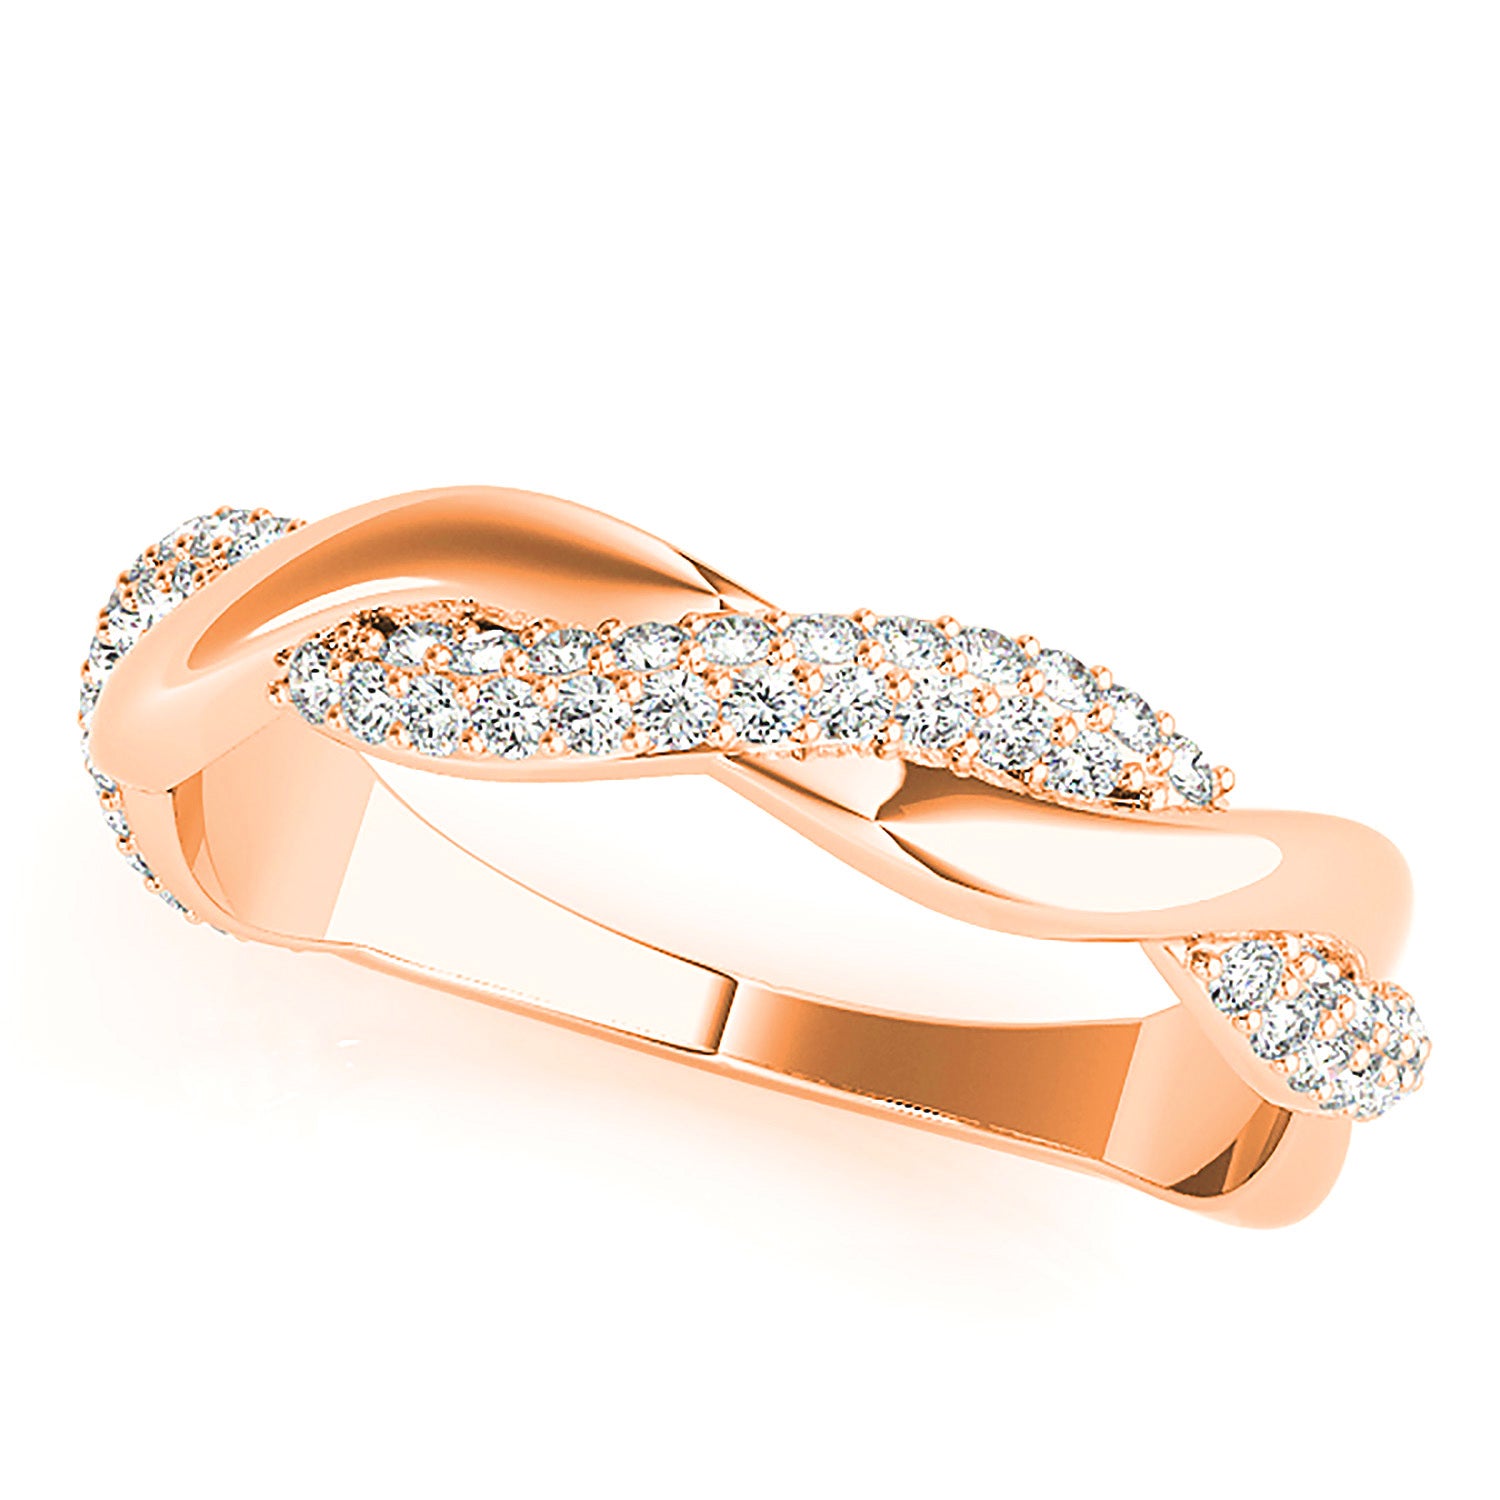 Diamond Wedding Band - 14K/18k Solid White Gold / Platinum | Pave Set Diamond Anniversary Ring | Modern Design-in 14K/18K White, Yellow, Rose Gold and Platinum - Christmas Jewelry Gift -VIRABYANI